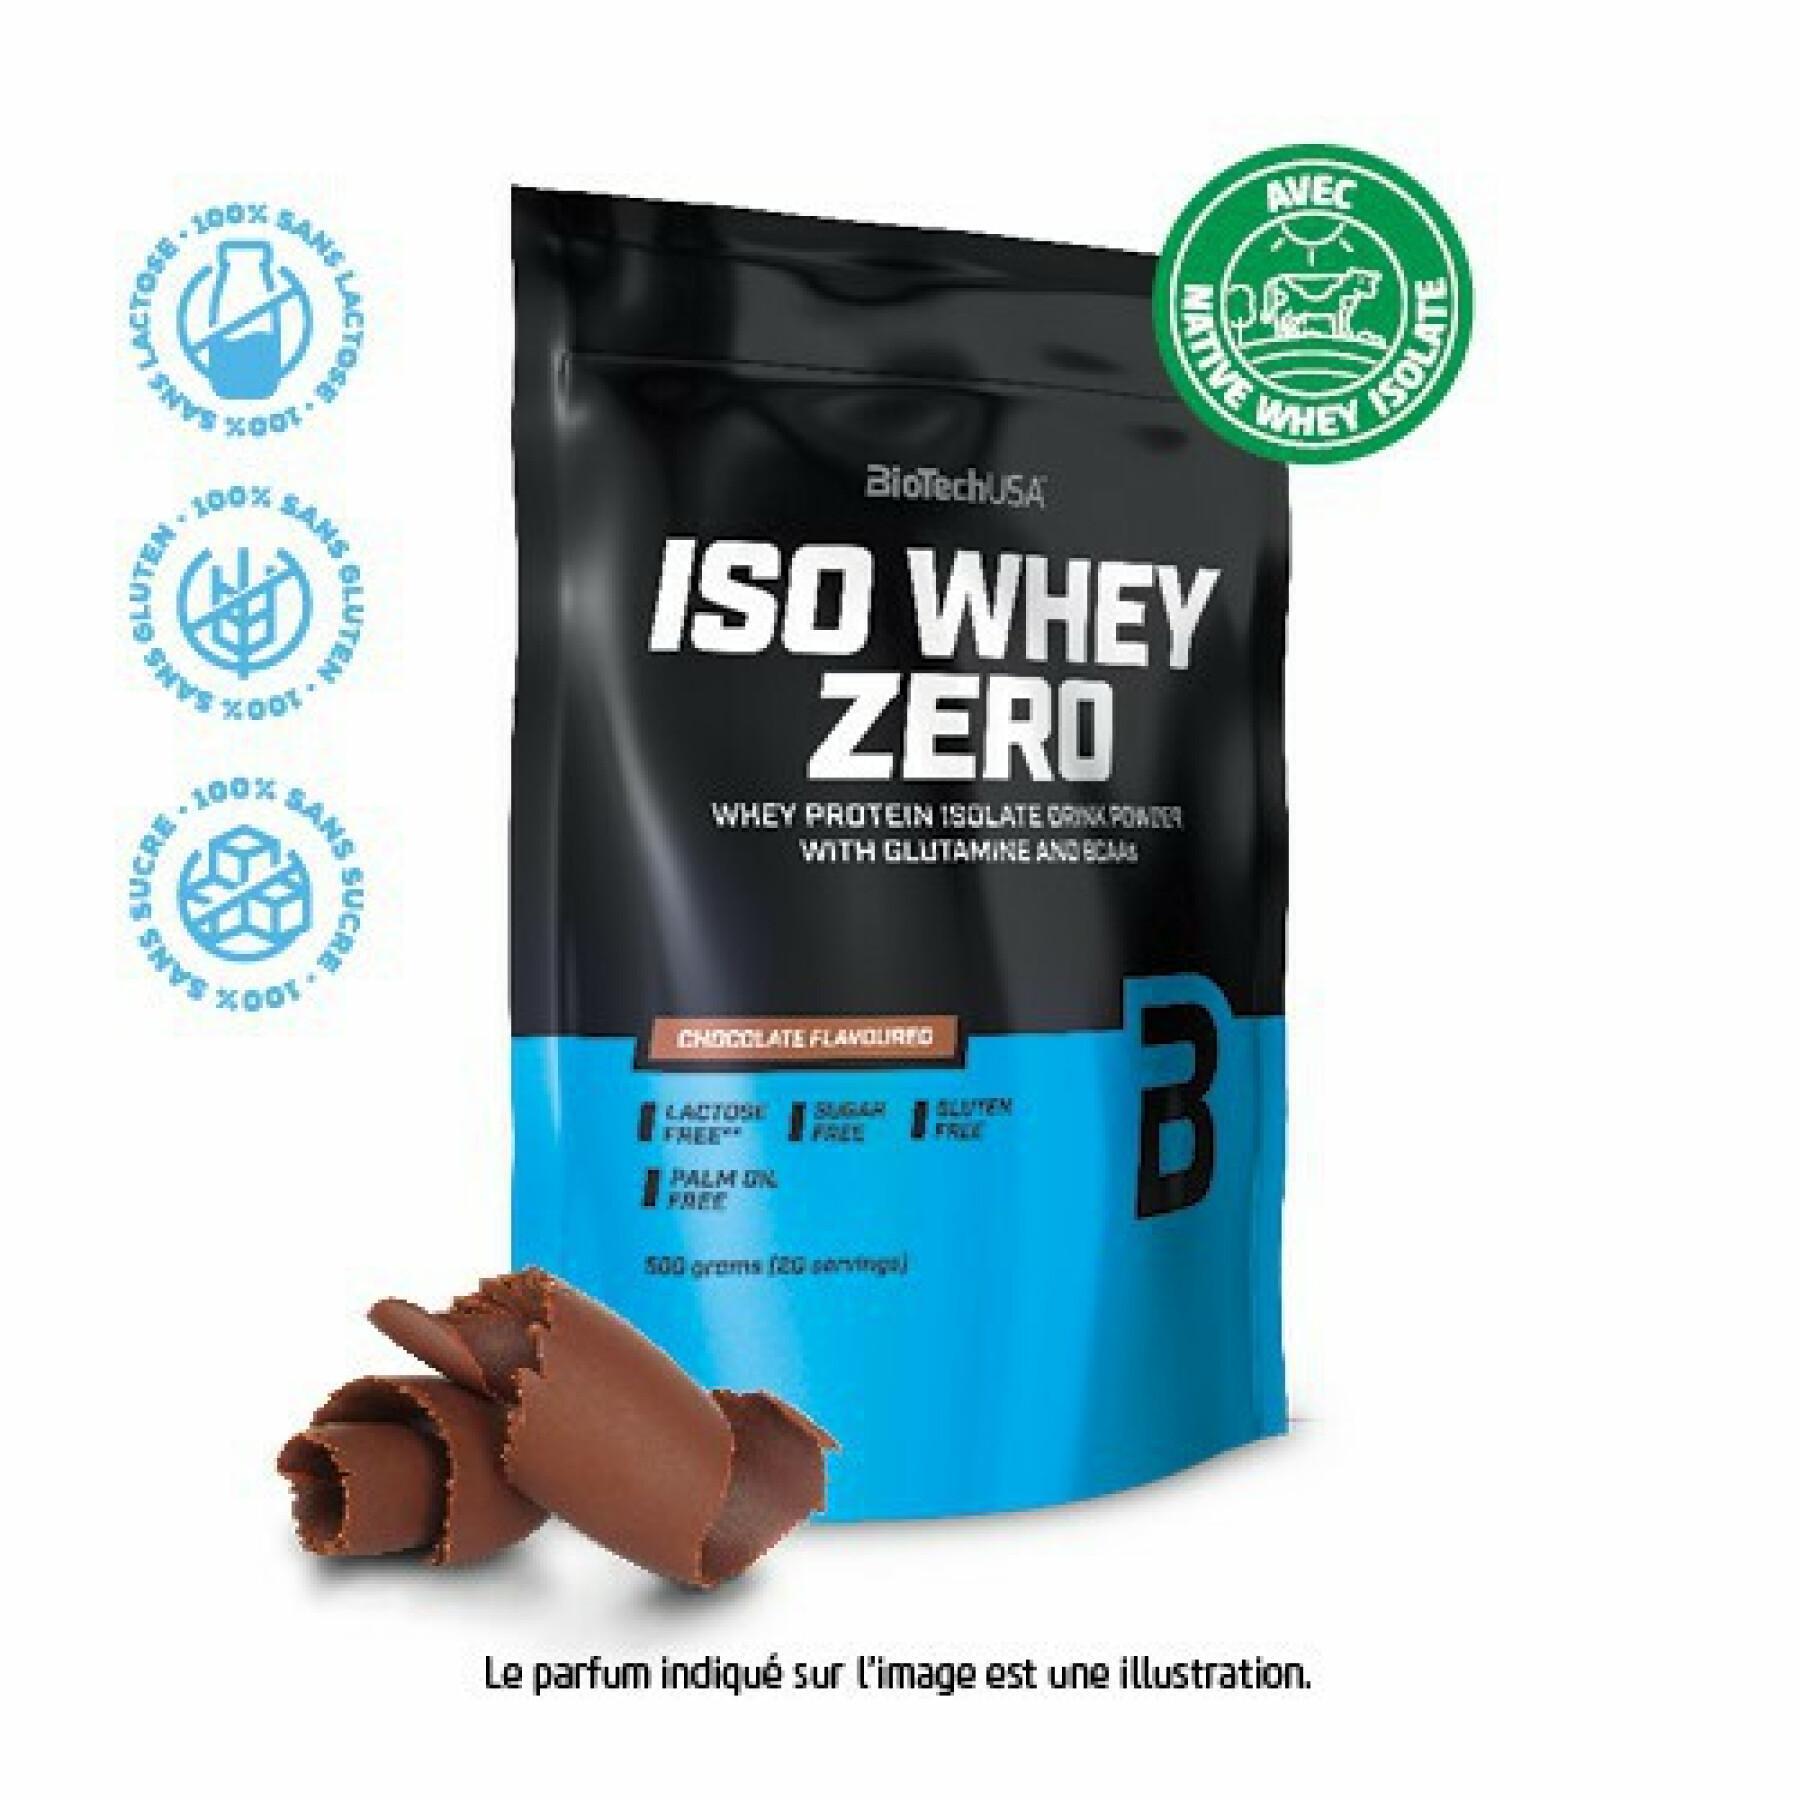 Pacote de 10 sacos de proteína Biotech USA iso whey zero lactose free - Chocolate - 500g